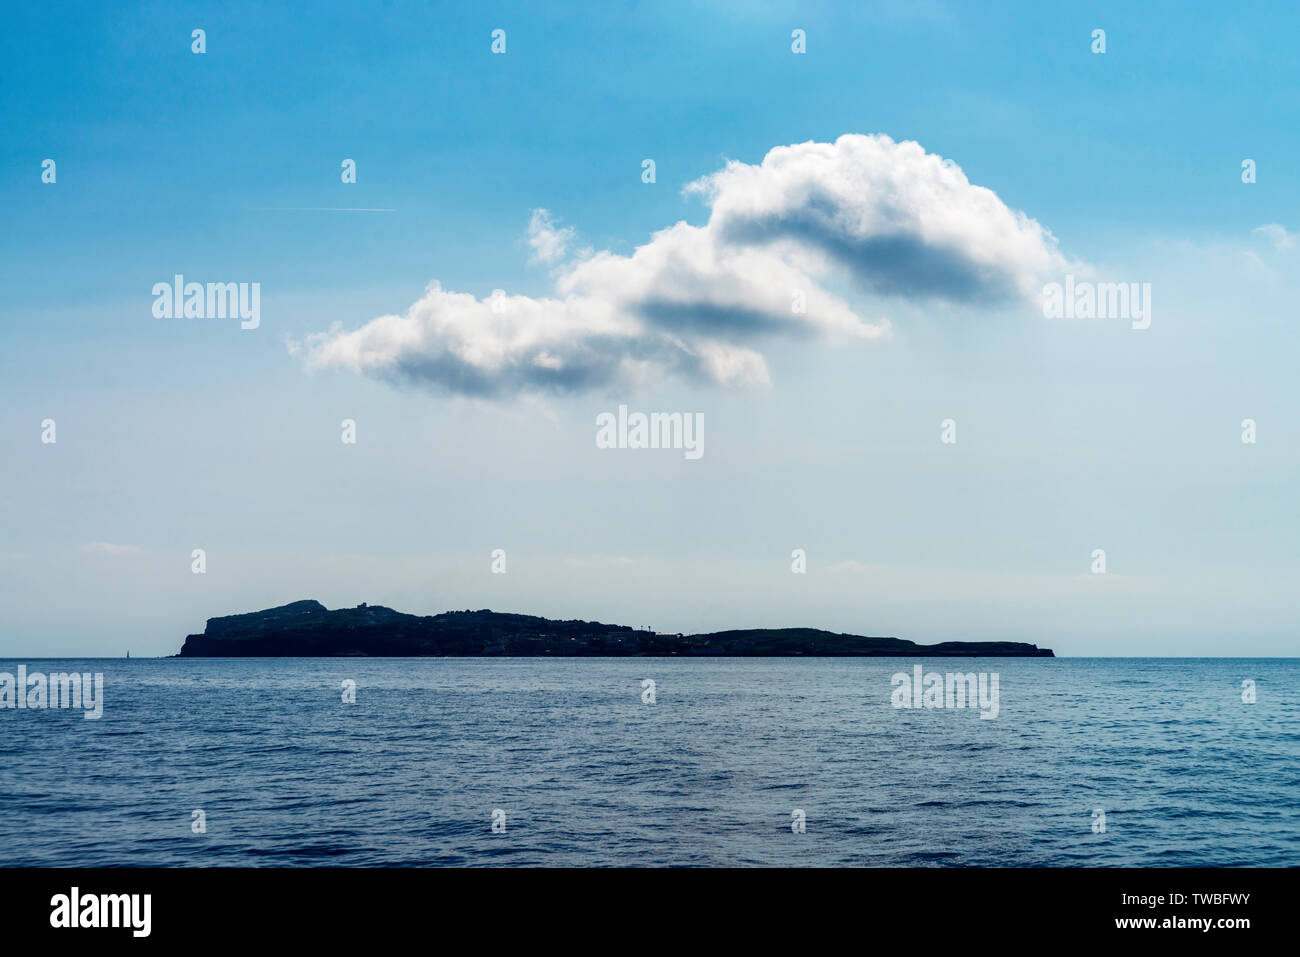 The island of Ventotene, Italy Stock Photo